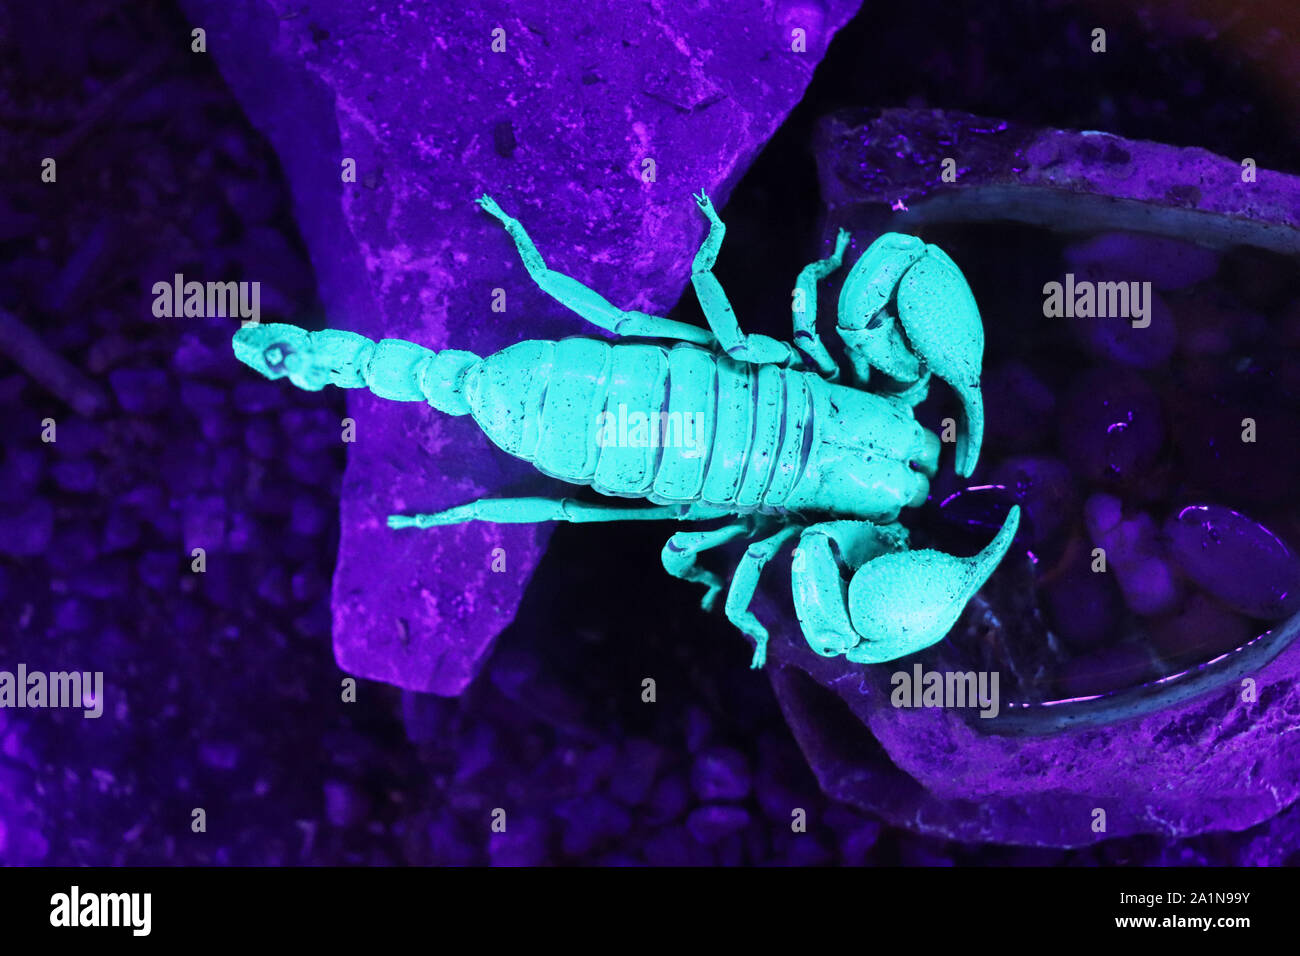 Fluorescing scorpion under ultraviolet light Stock Photo